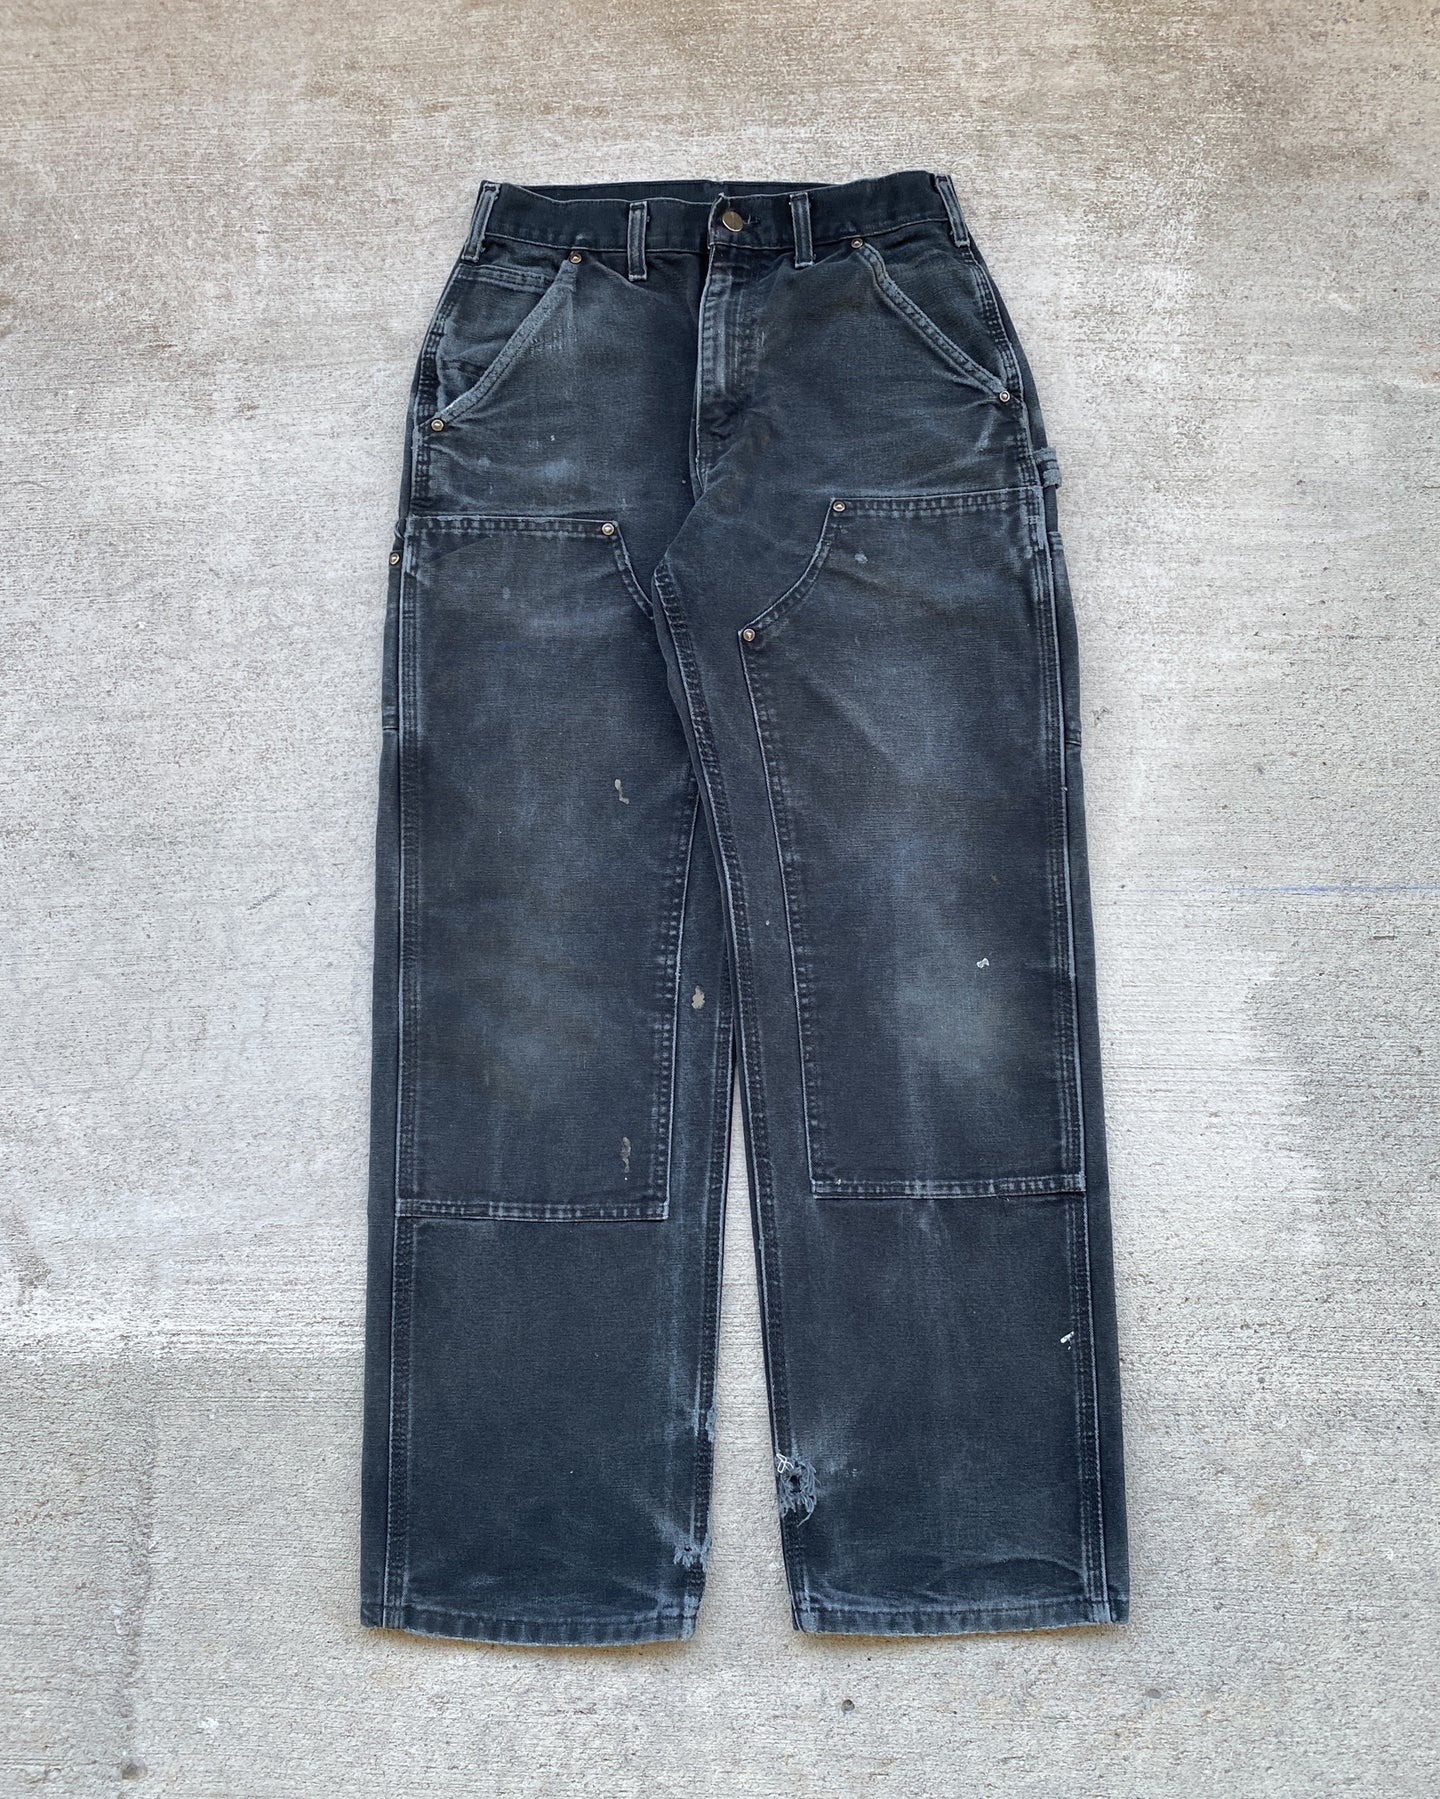 1990s Carhartt Black Double Knee Pants - Size 28 x 30